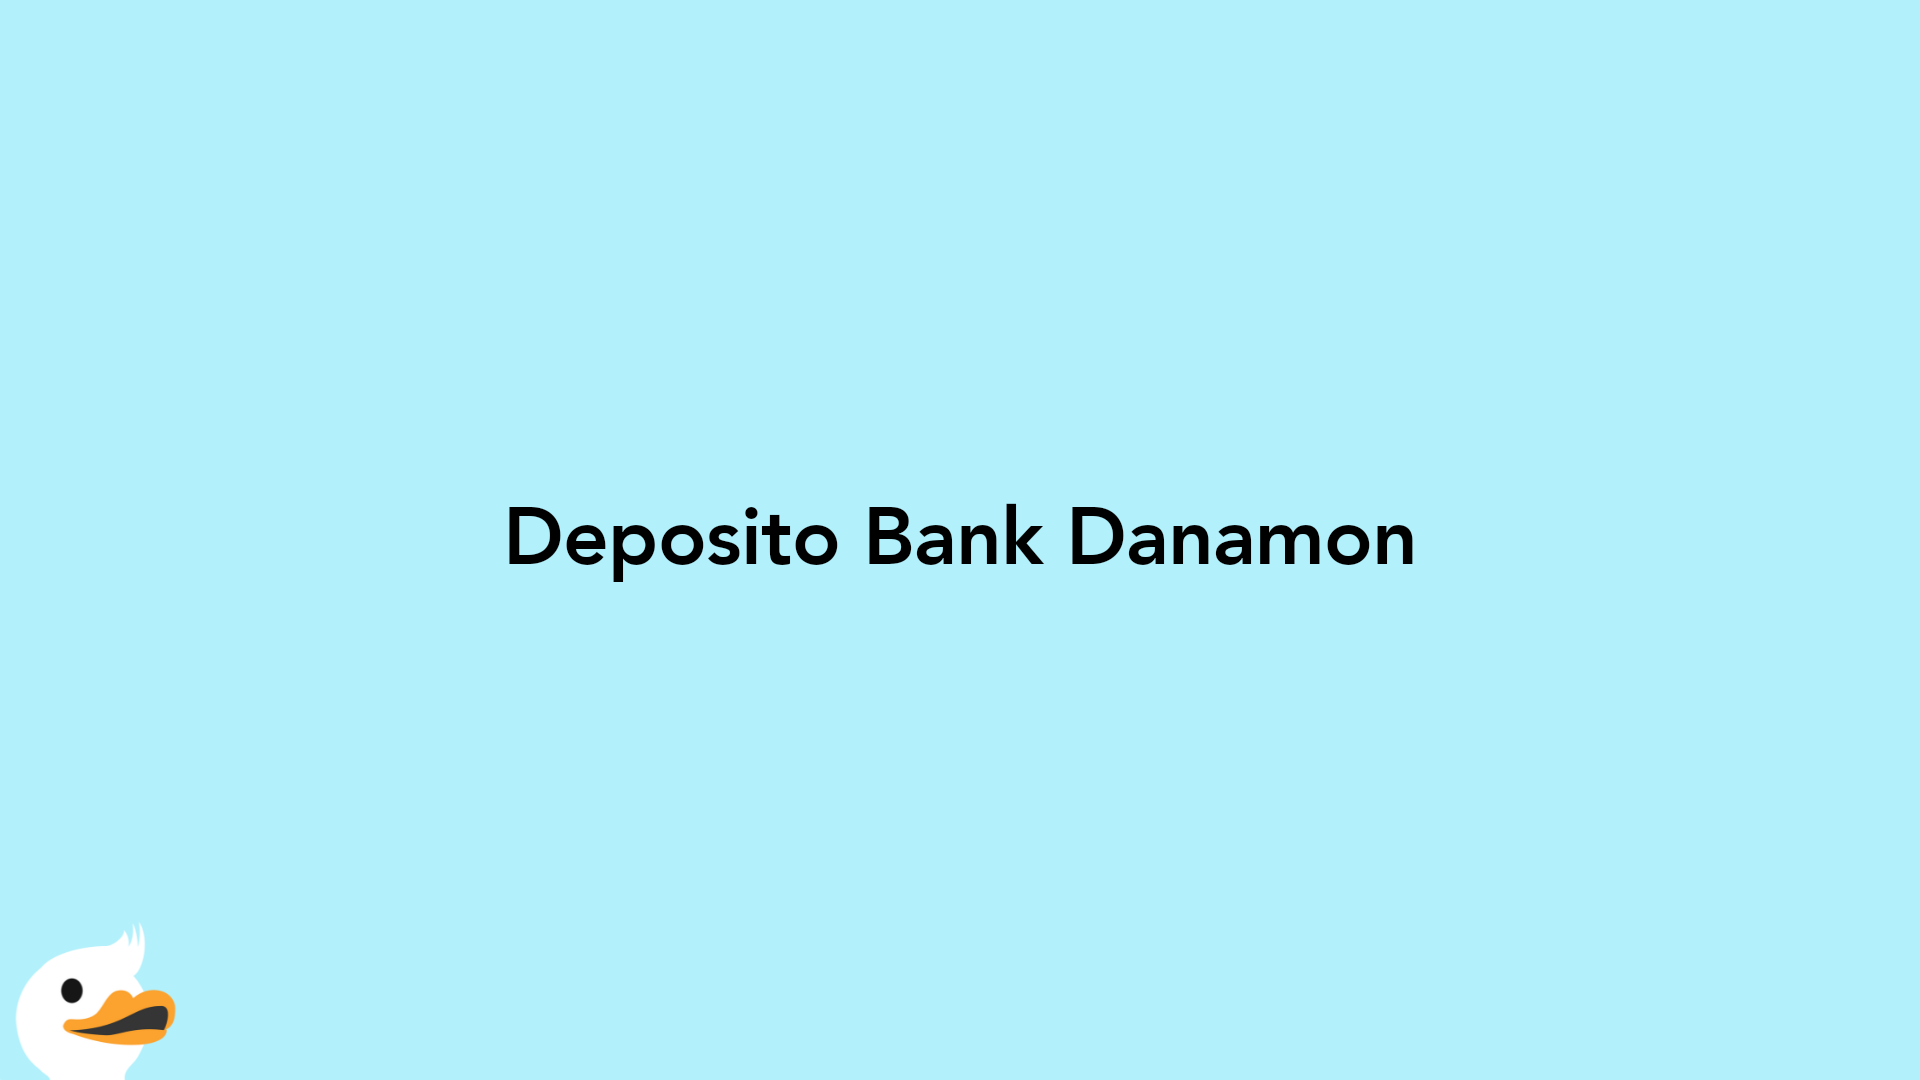 Deposito Bank Danamon